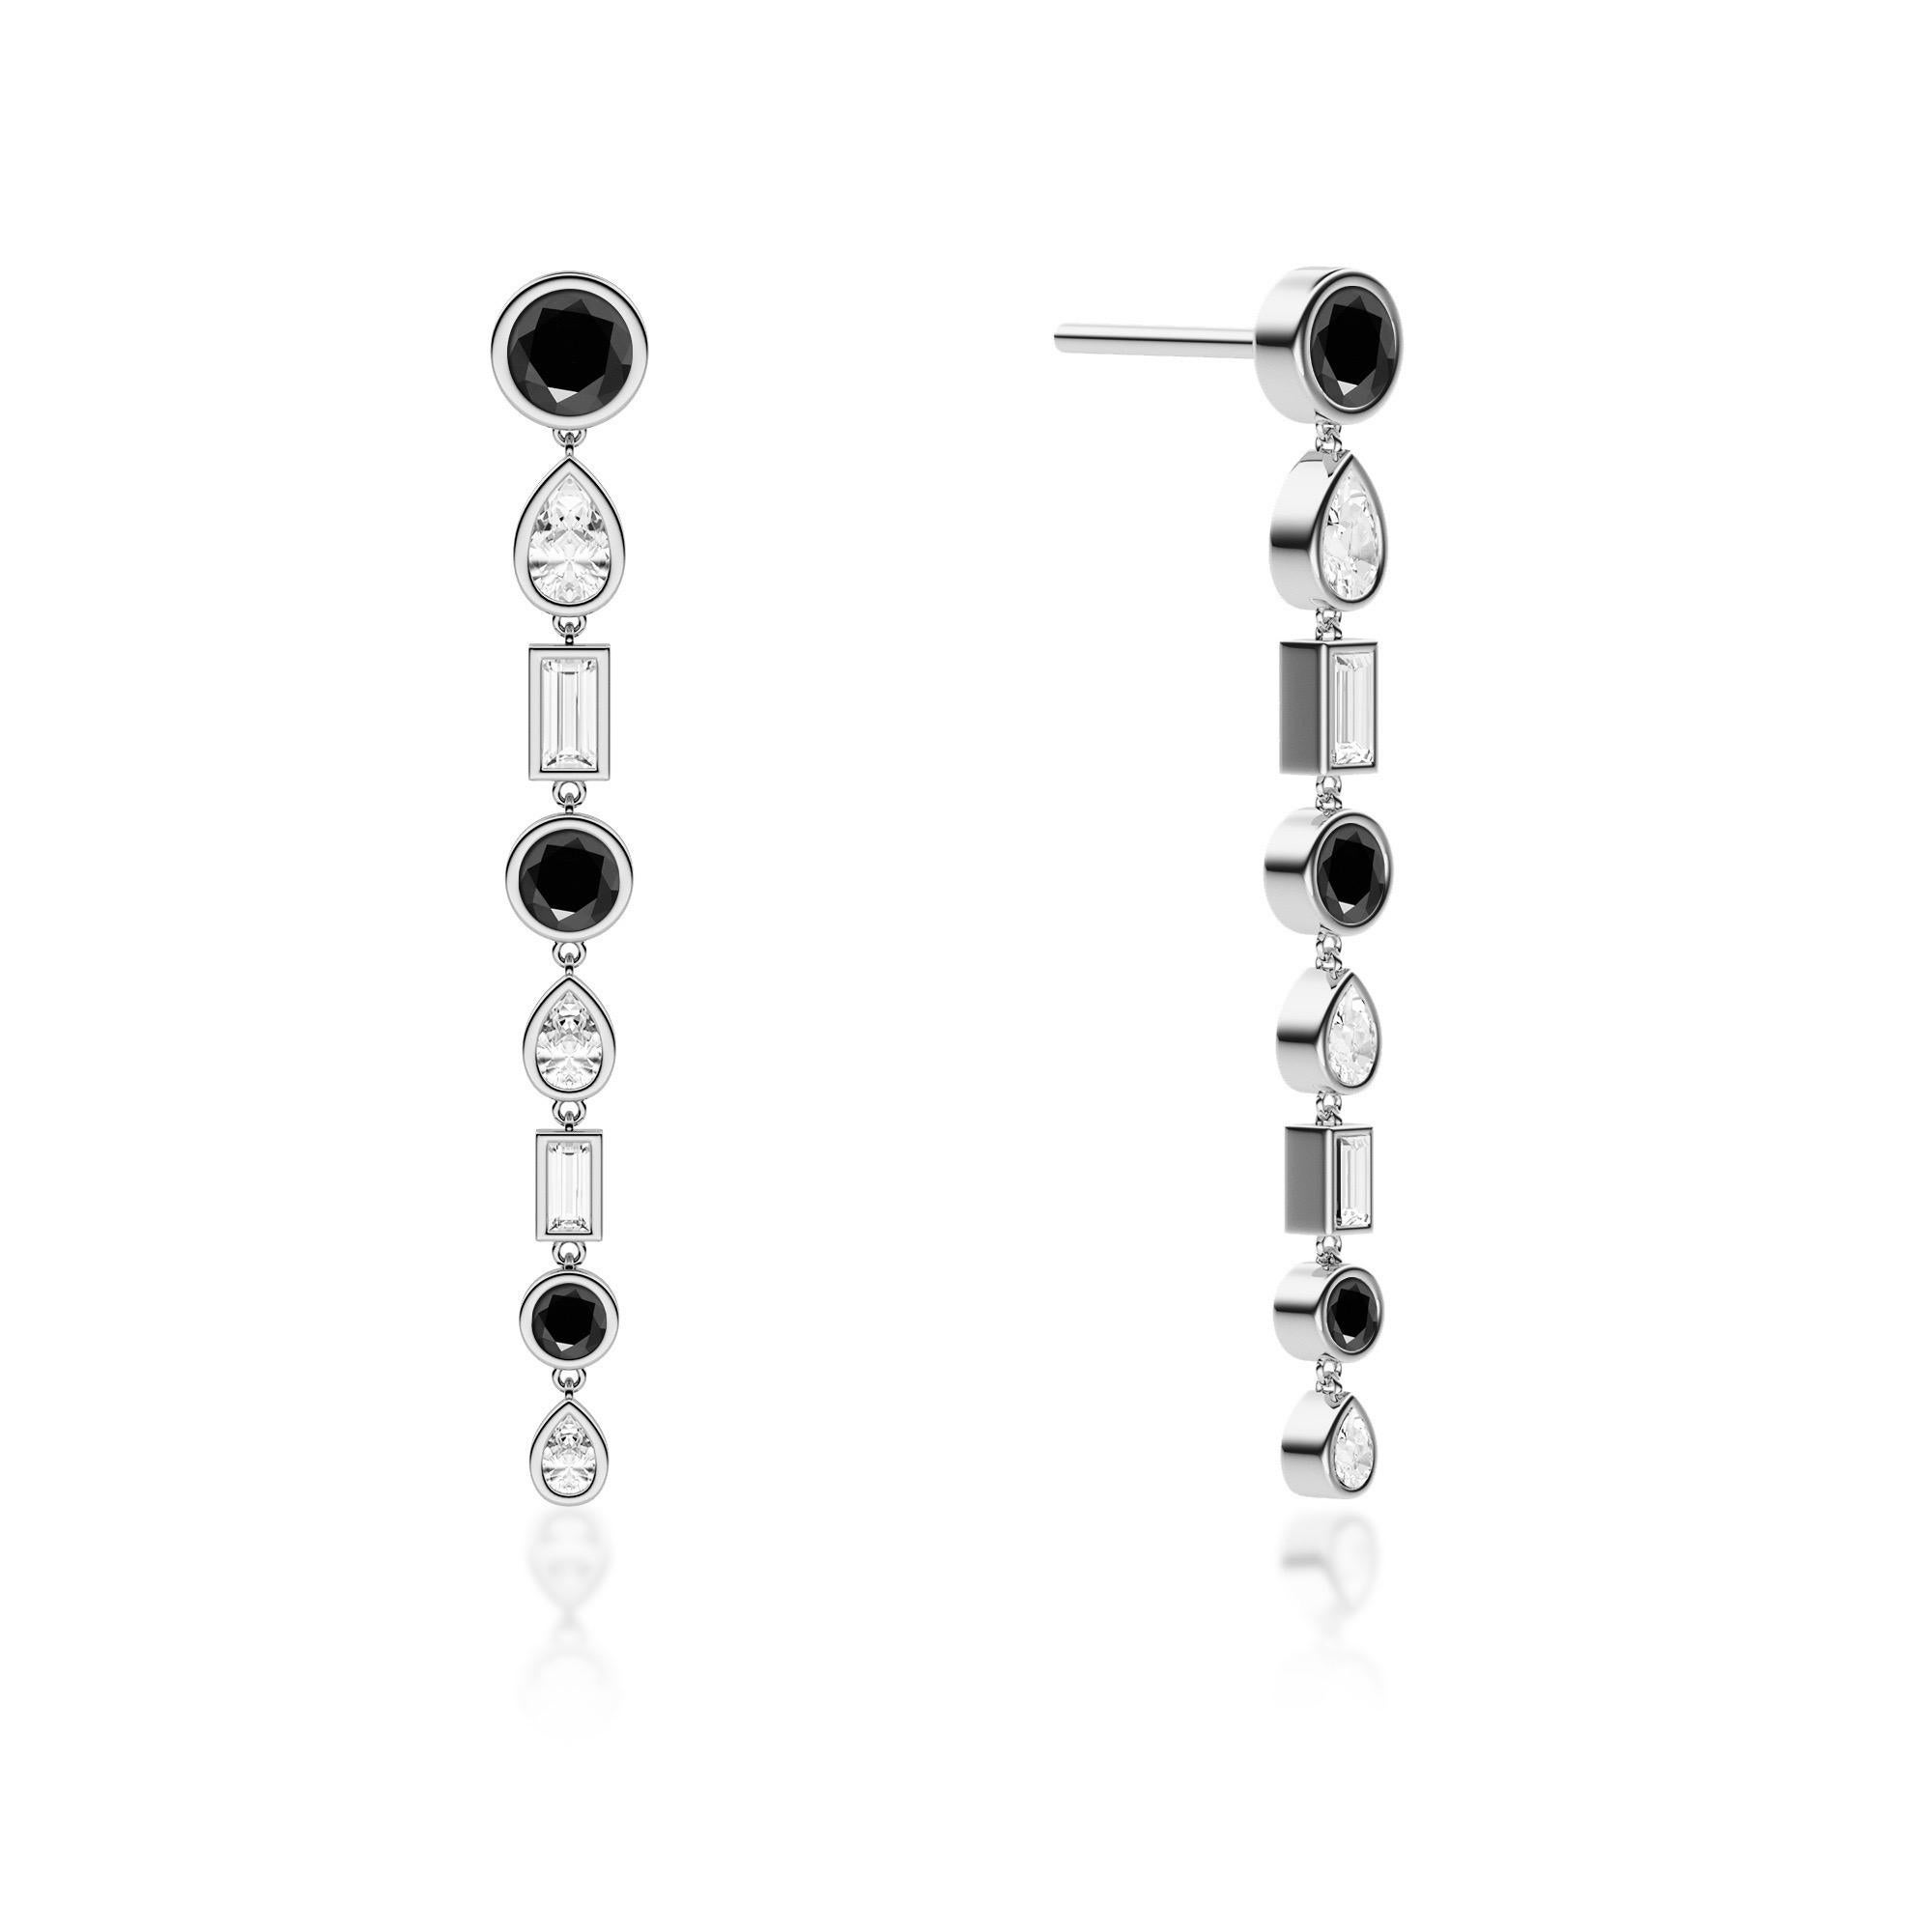 Ruben Manuel Designs “Winter” Earrings.  
18K WG drops w/VS graduated white pear & baguette diamonds, featuring round black diamonds.  3.15 ctw.